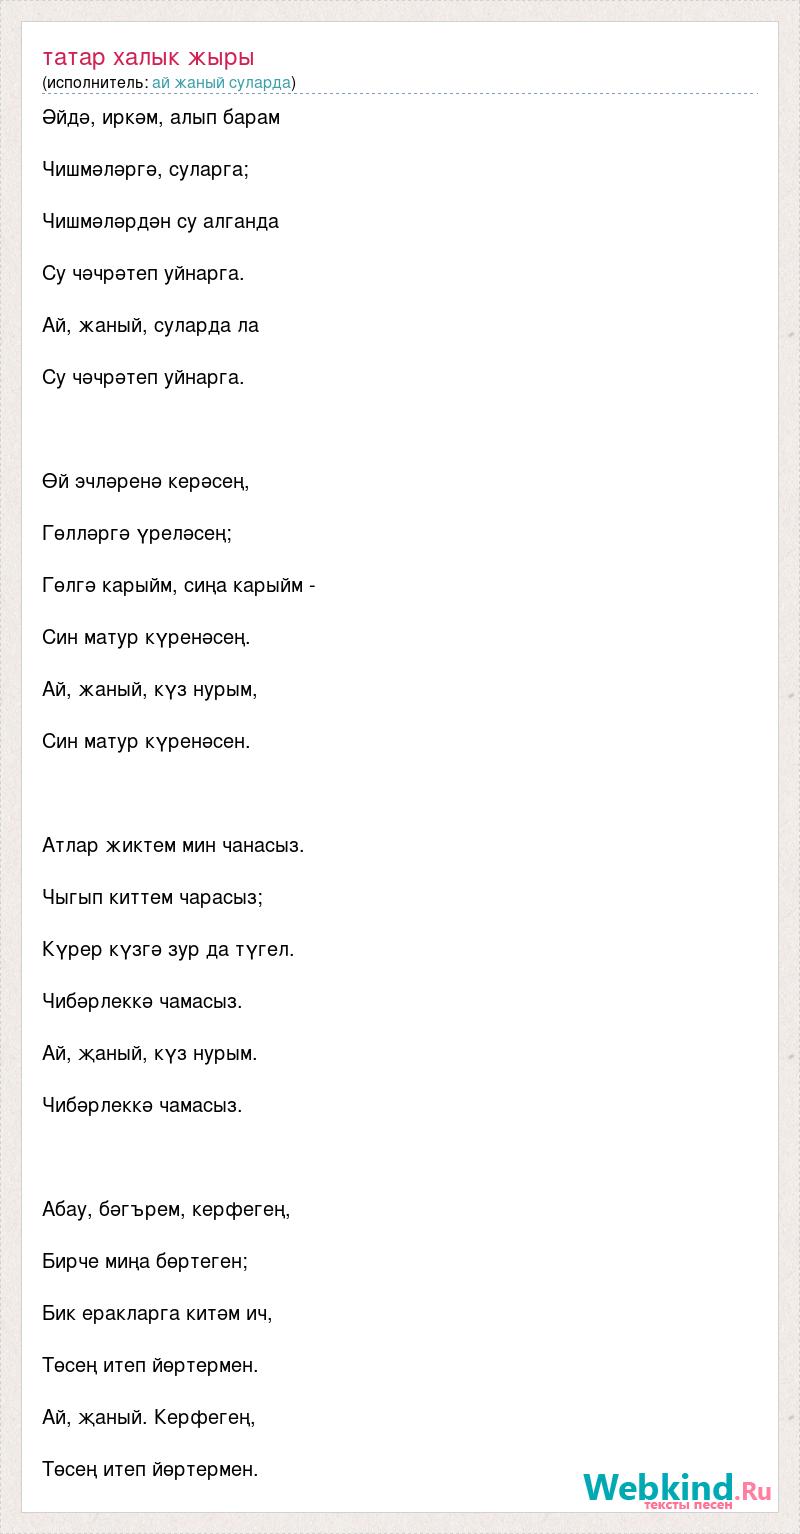 Песня на татарском со словами